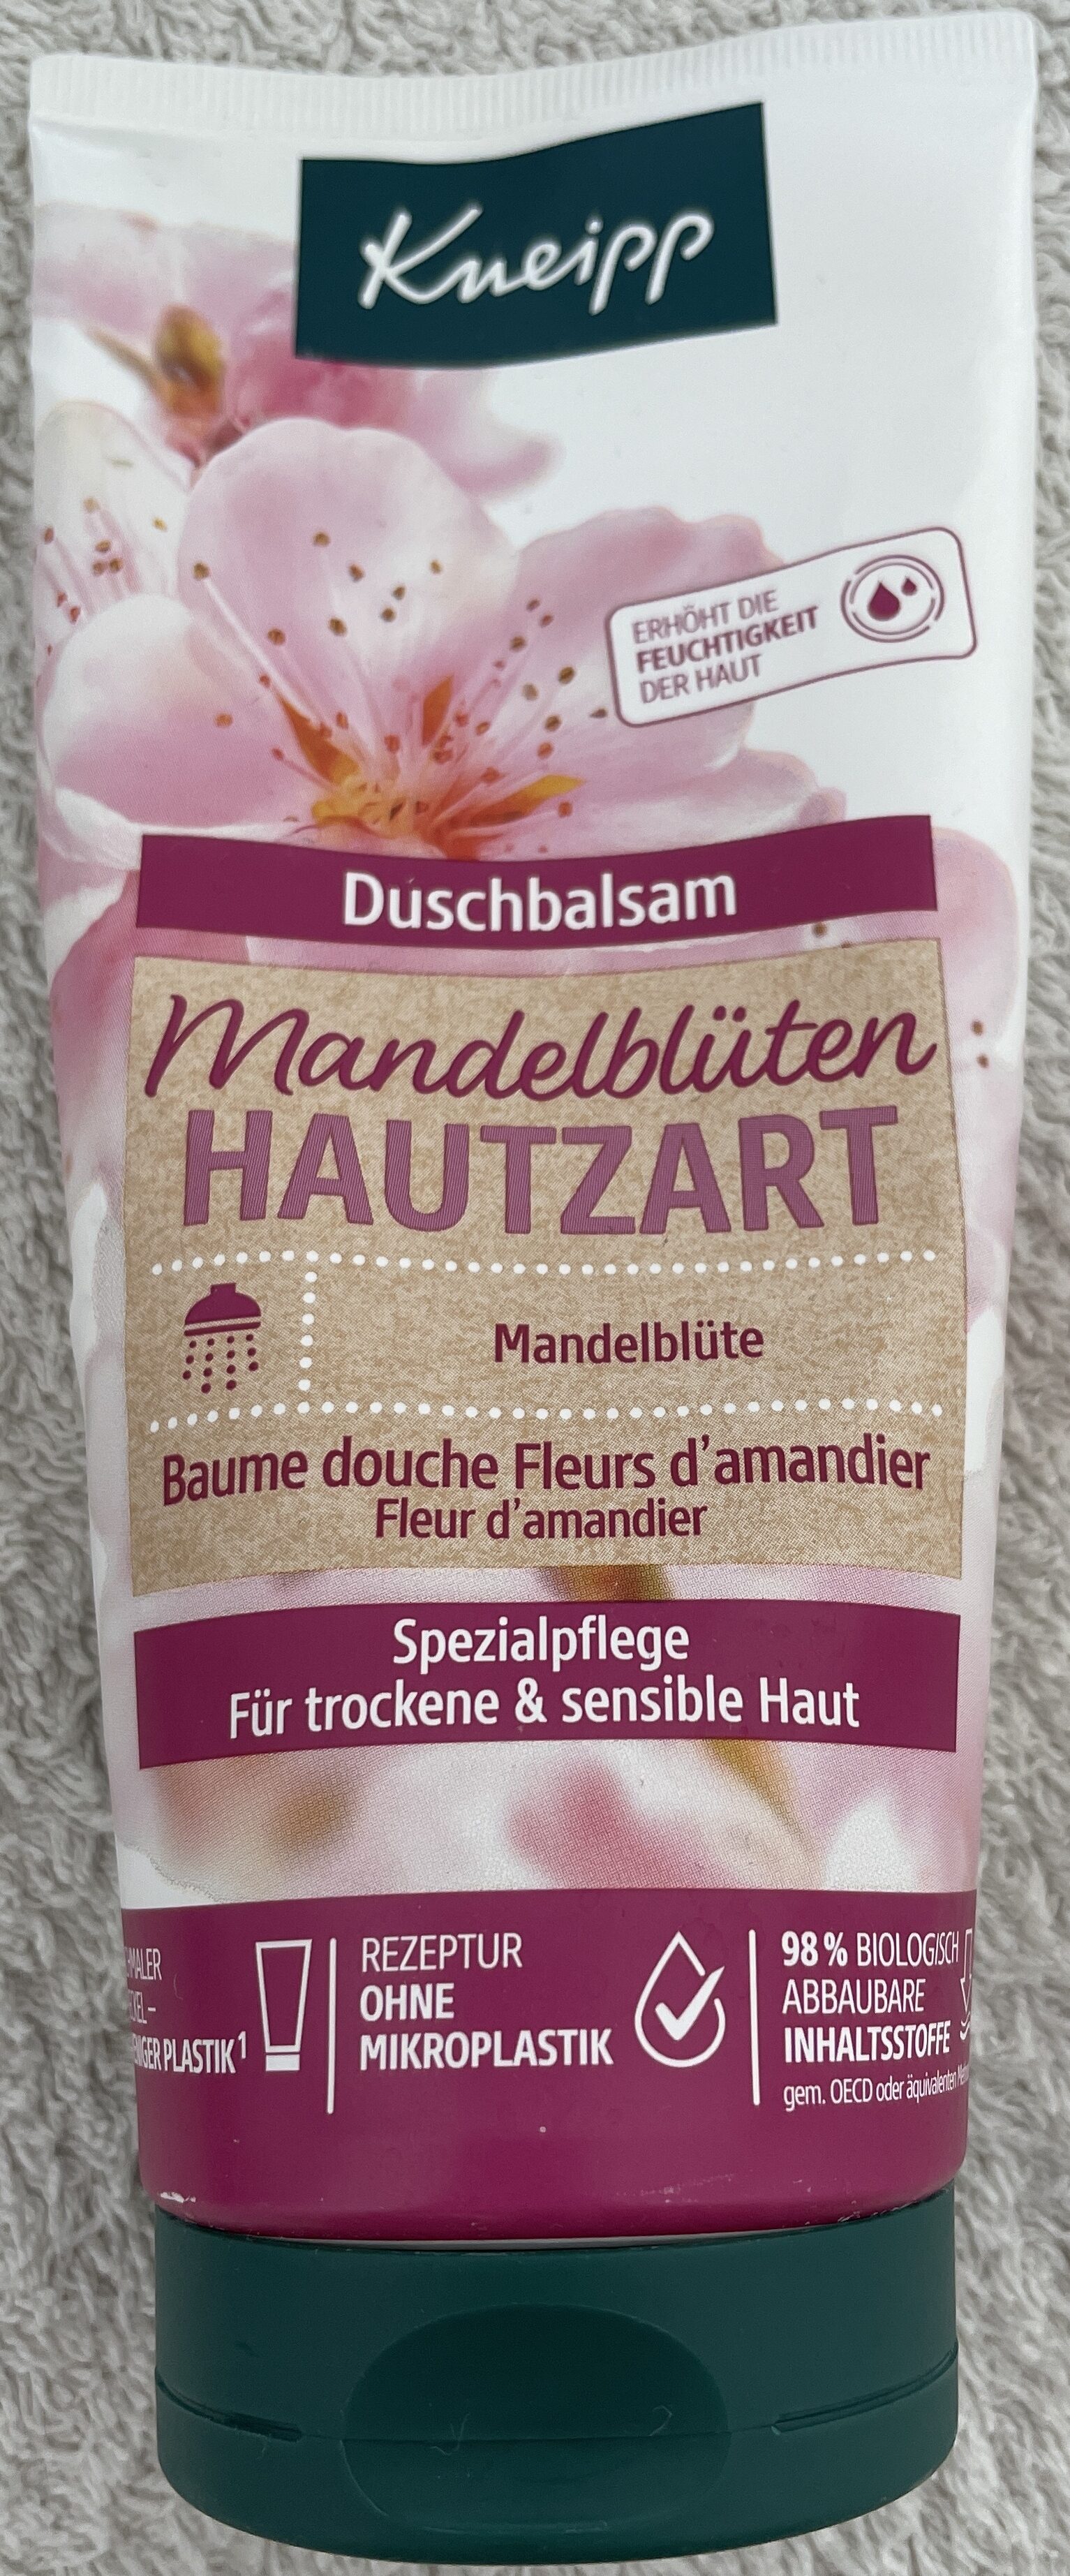 Mandelblüten Hautzart - Produit - de